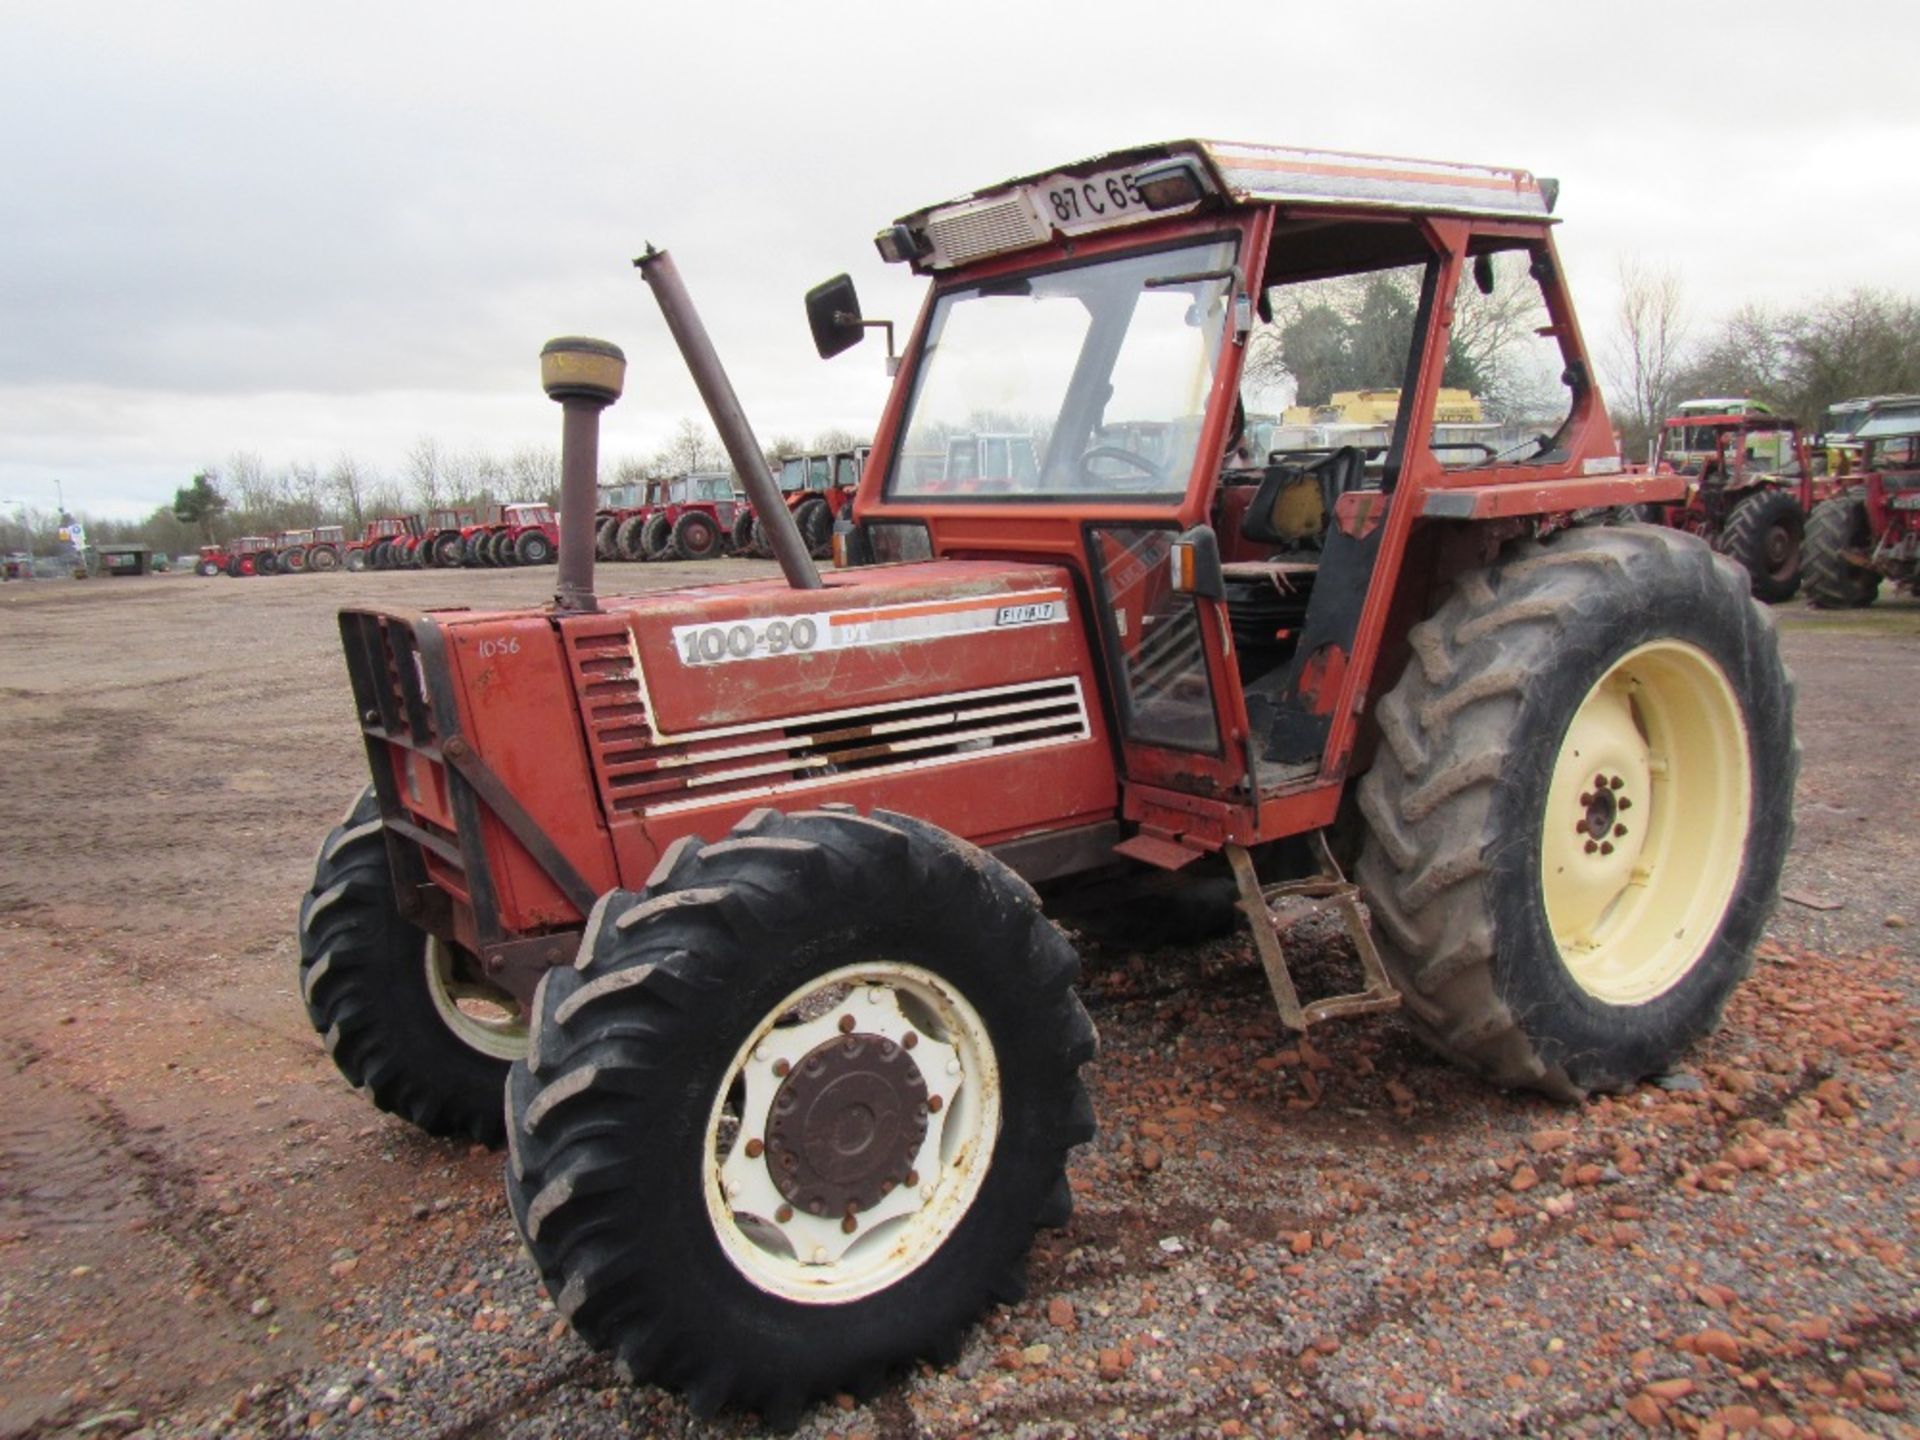 Fiat 100-90 4wd Tractor. Ser. No. 339880